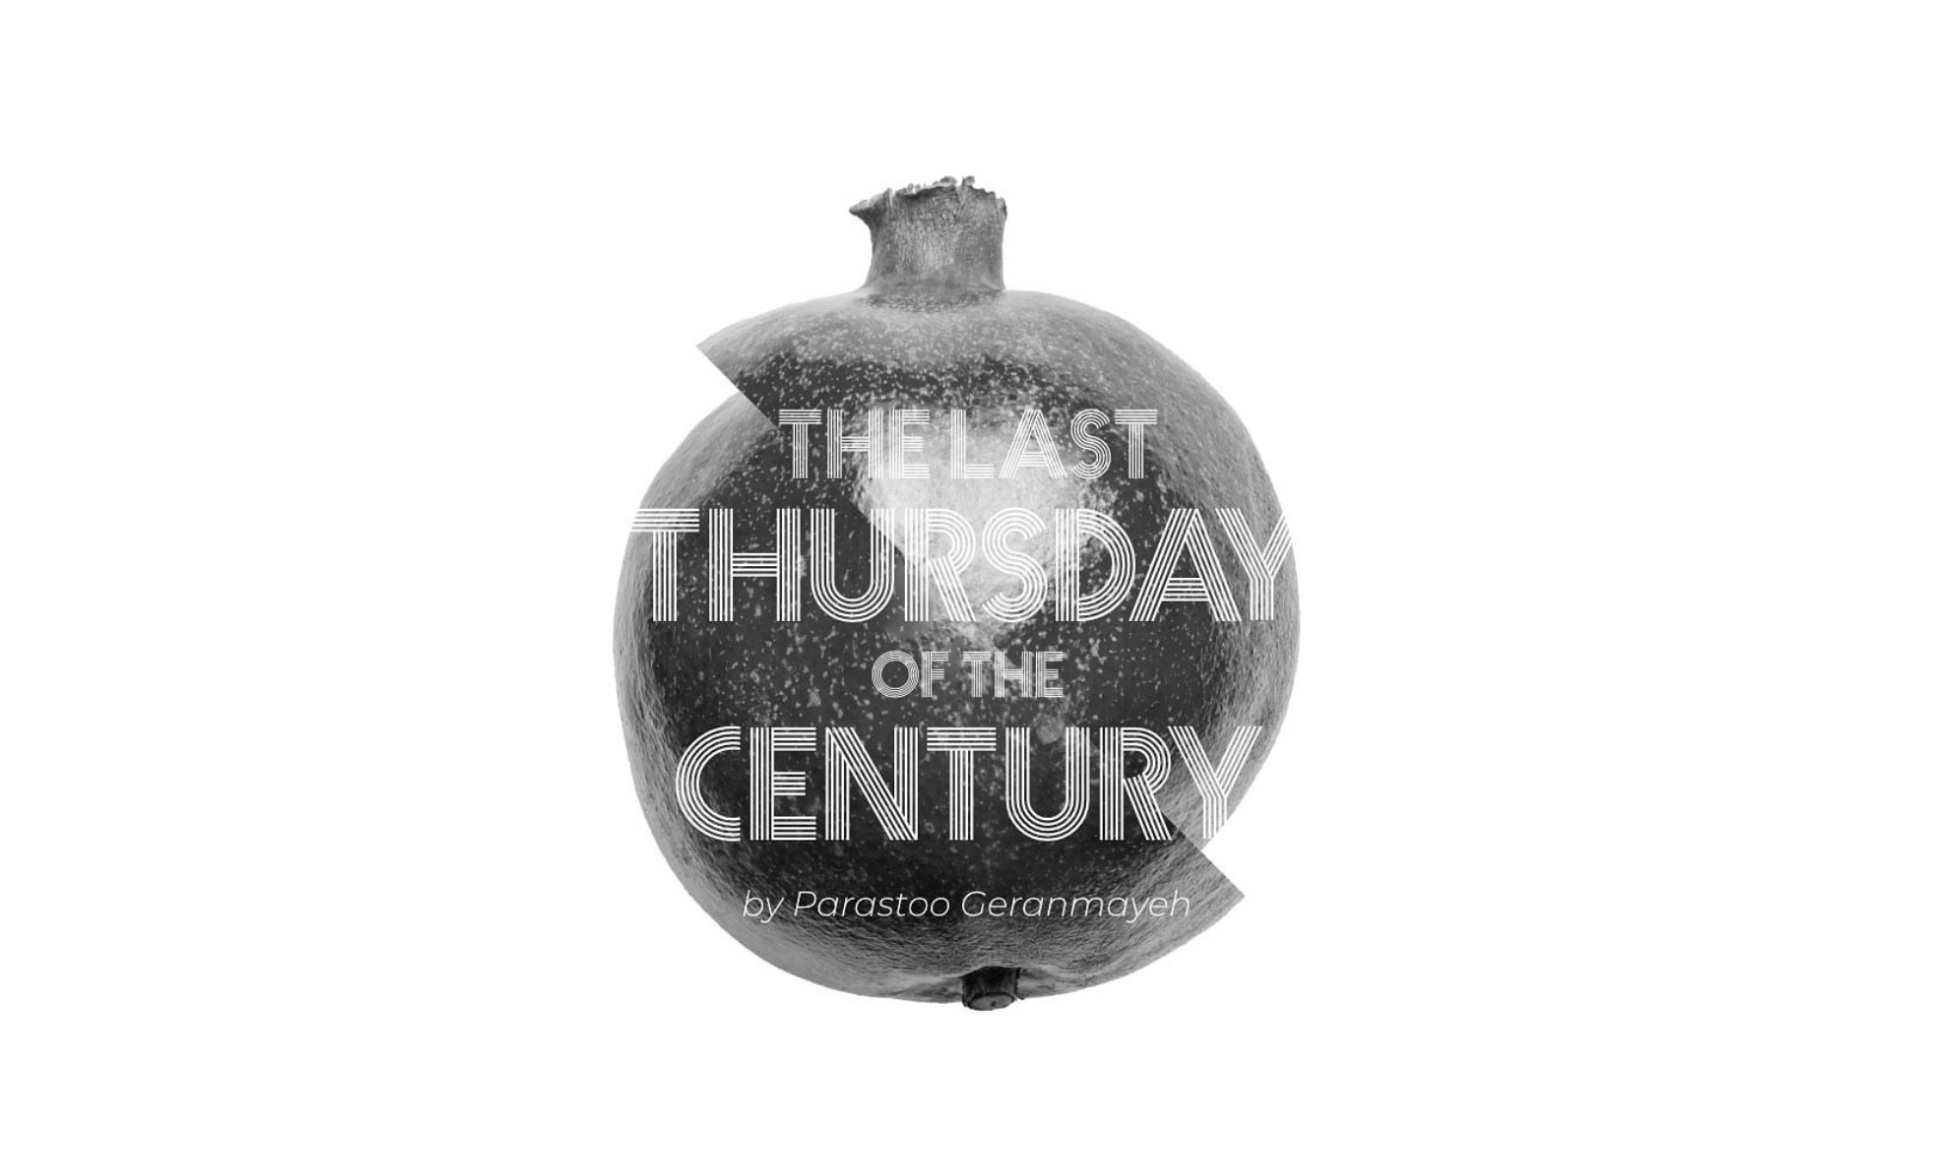 The Last Thursday of the Century